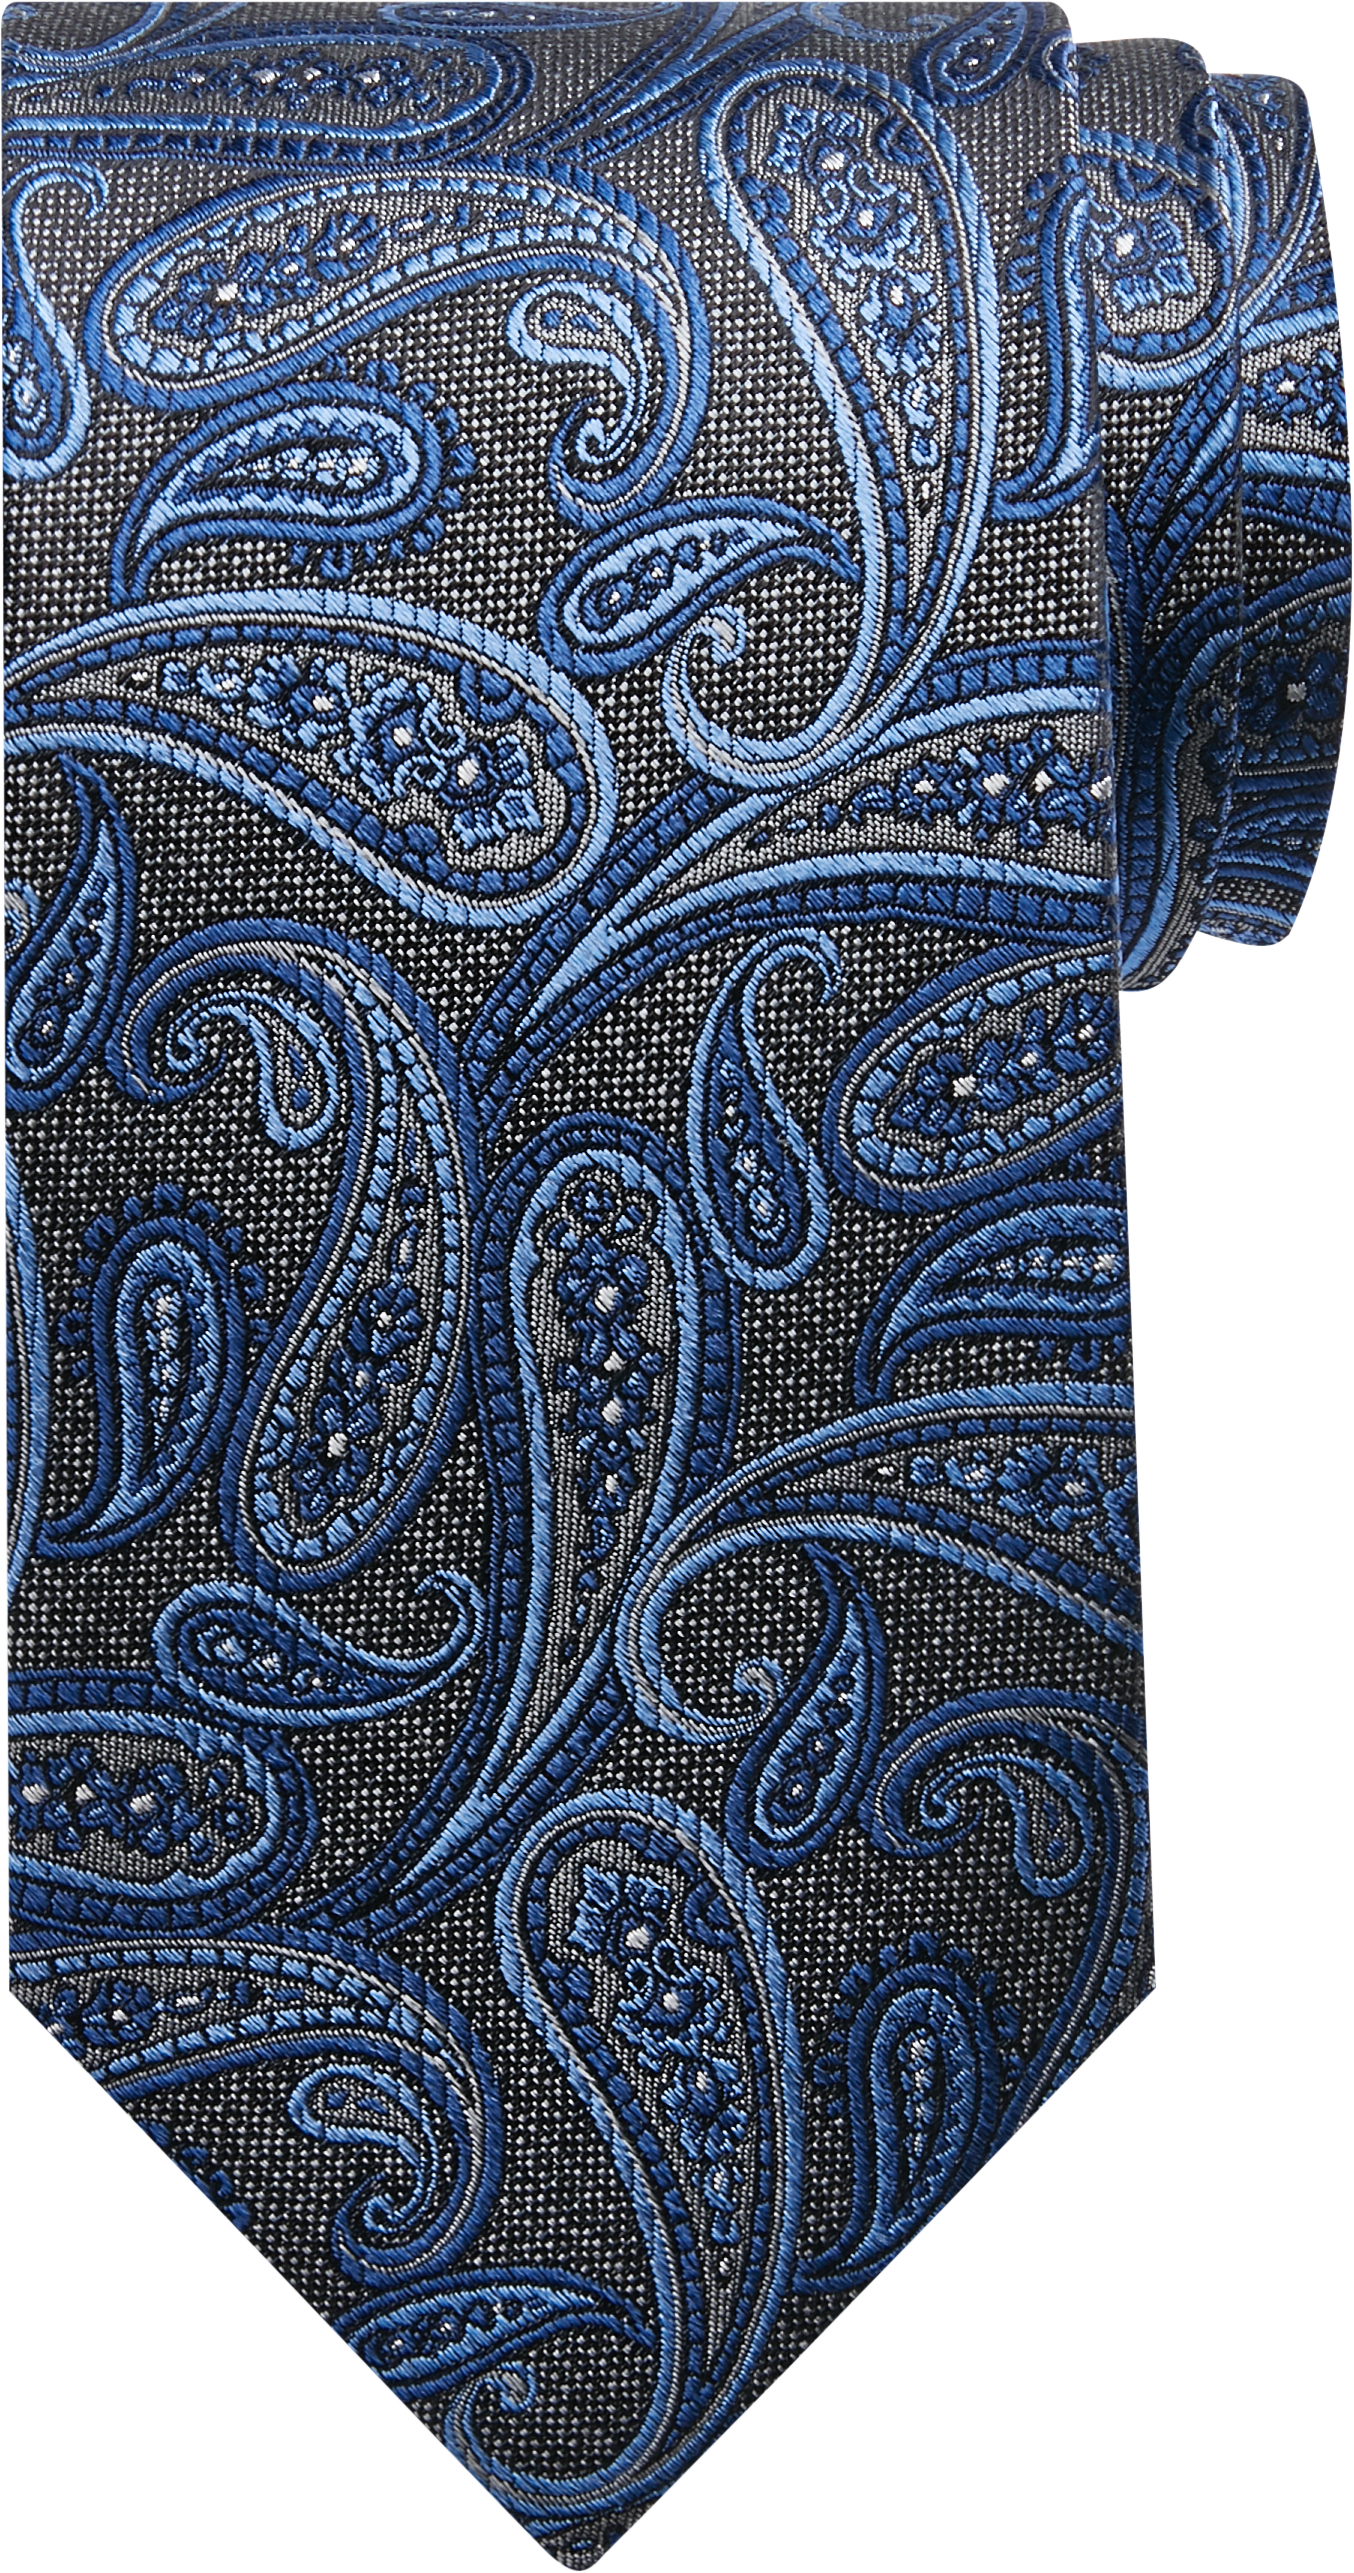 Pronto Uomo Platinum Narrow Tie, Blue & Charcoal Paisley - Men's ...